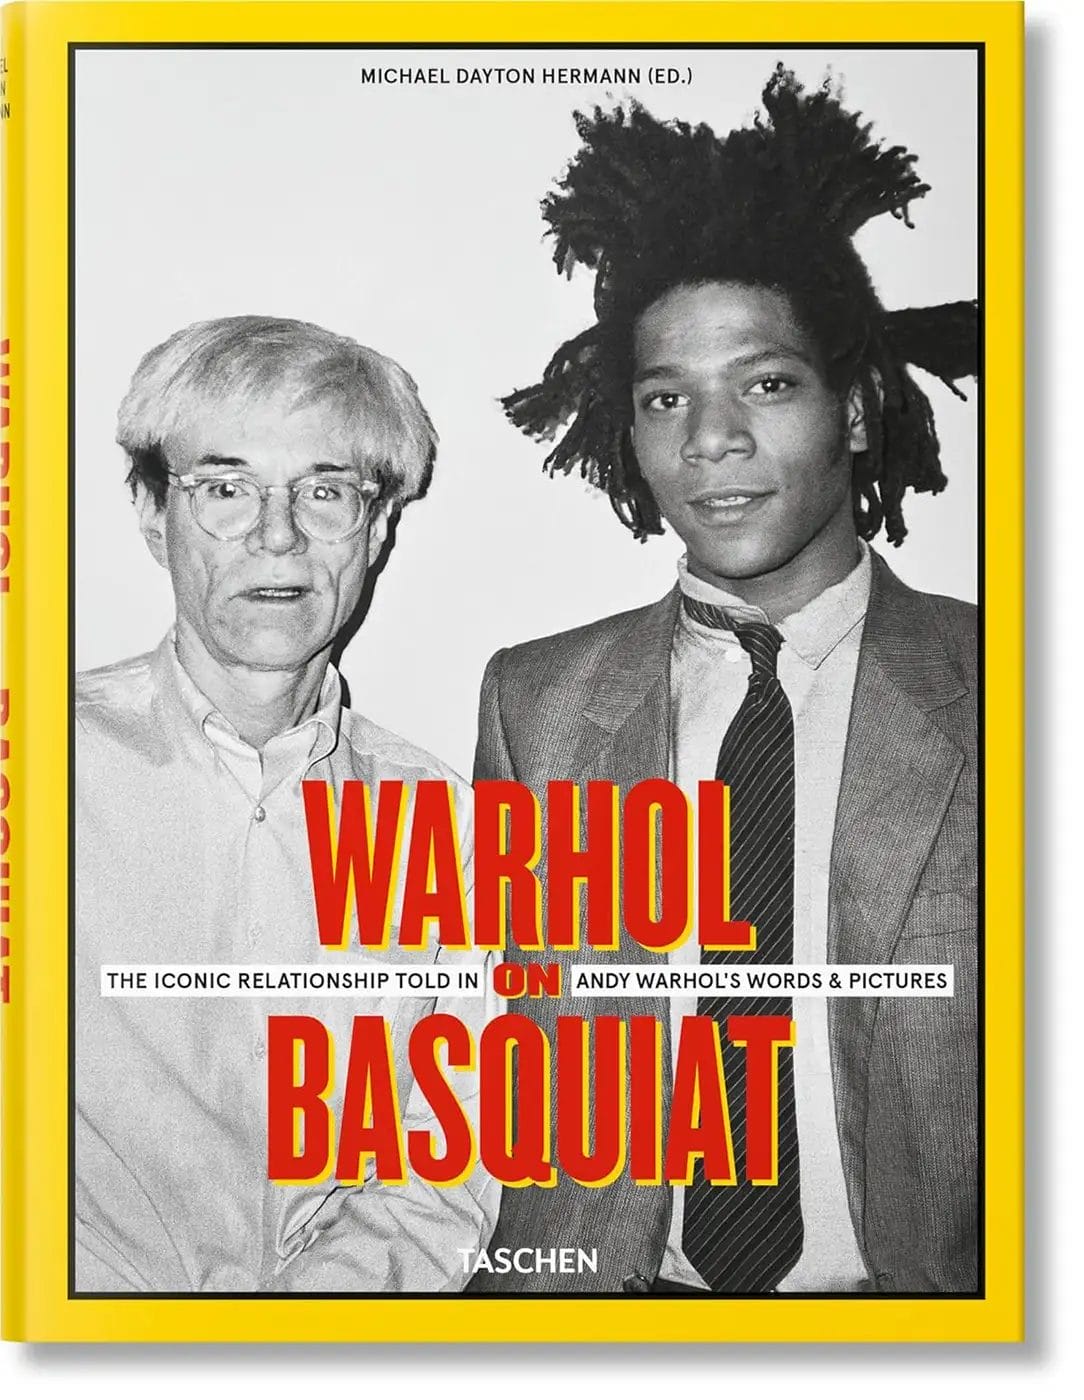 Image: Warhol on Basquiat